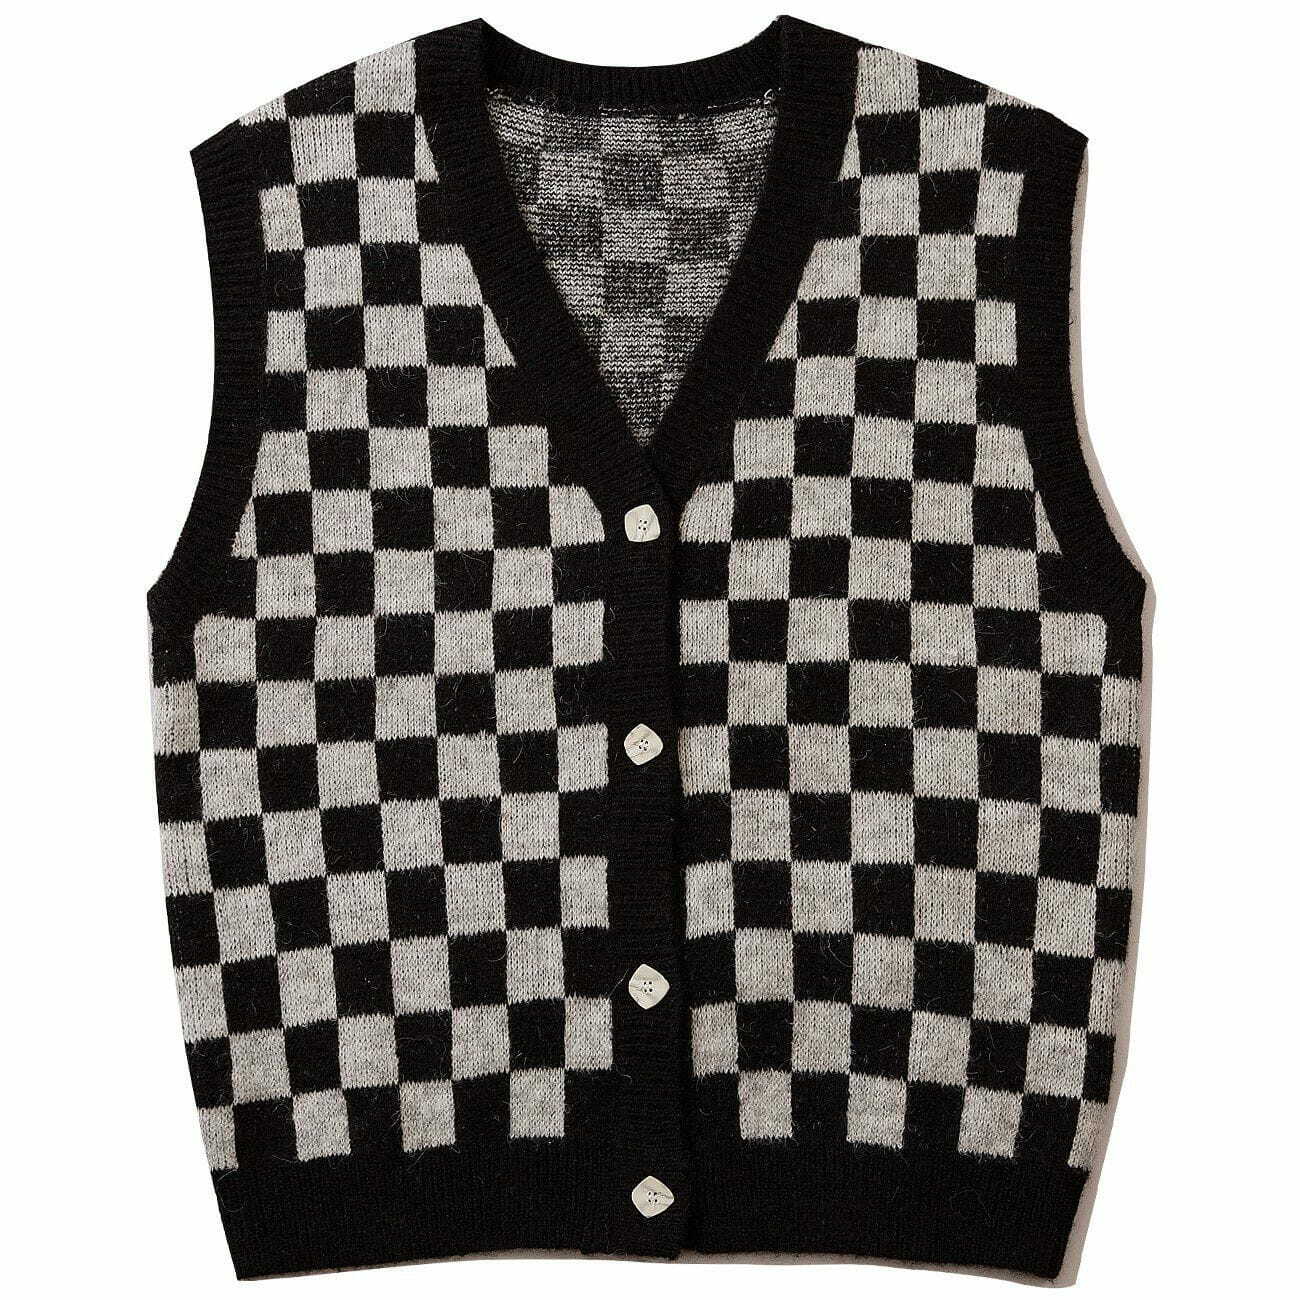 checkerboard knit sweater vest edgy streetwear essential 5191